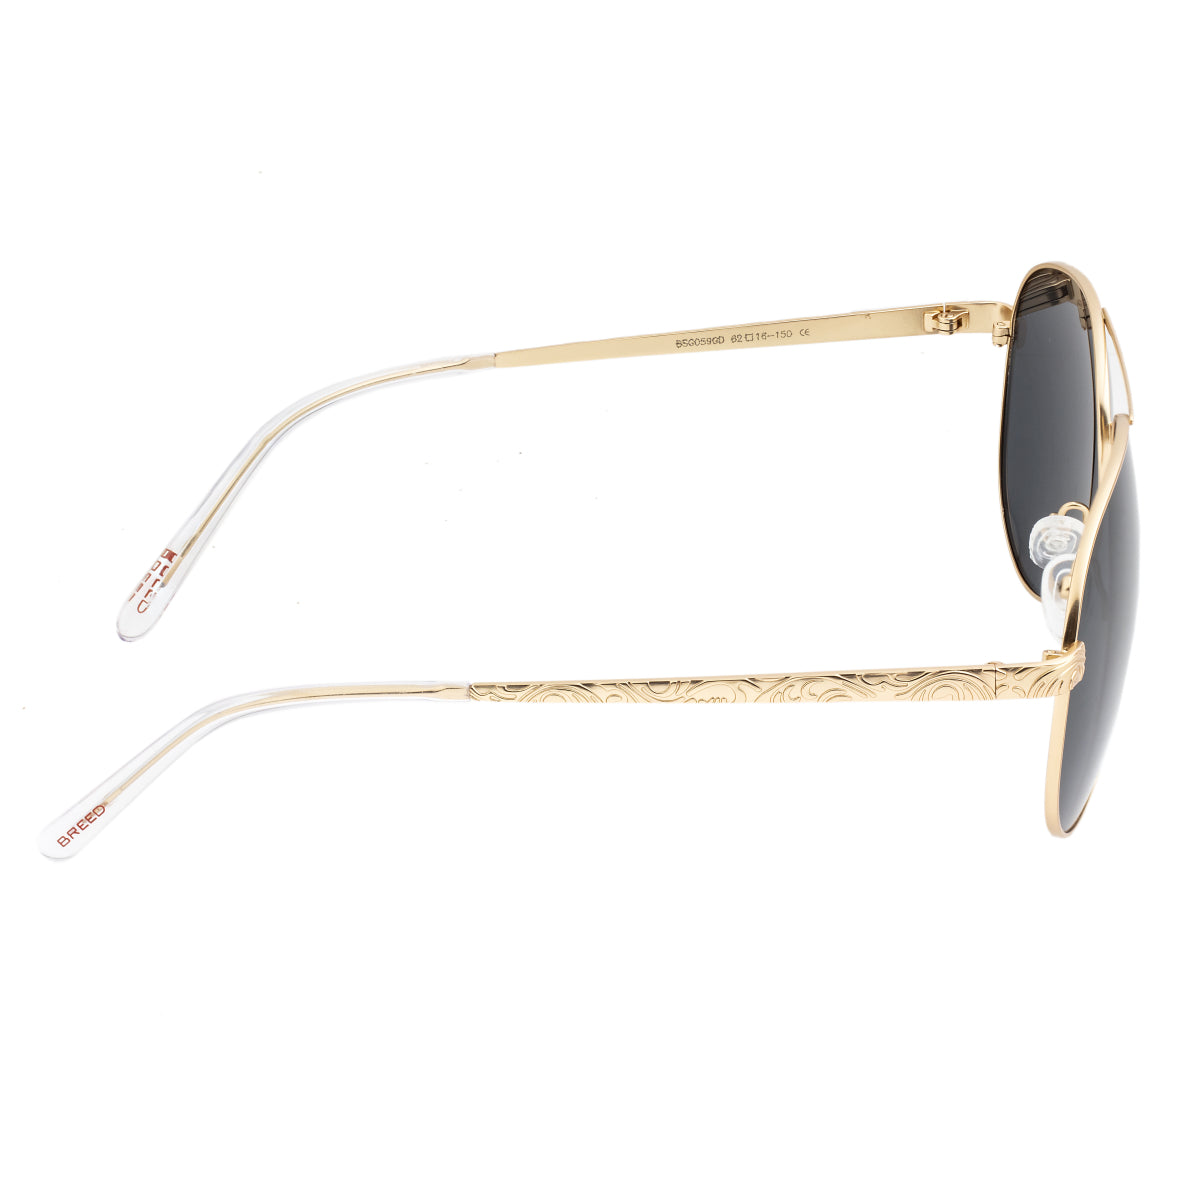 Breed Void Titanium Polarized Sunglasses - Gold/Black - BSG059GD